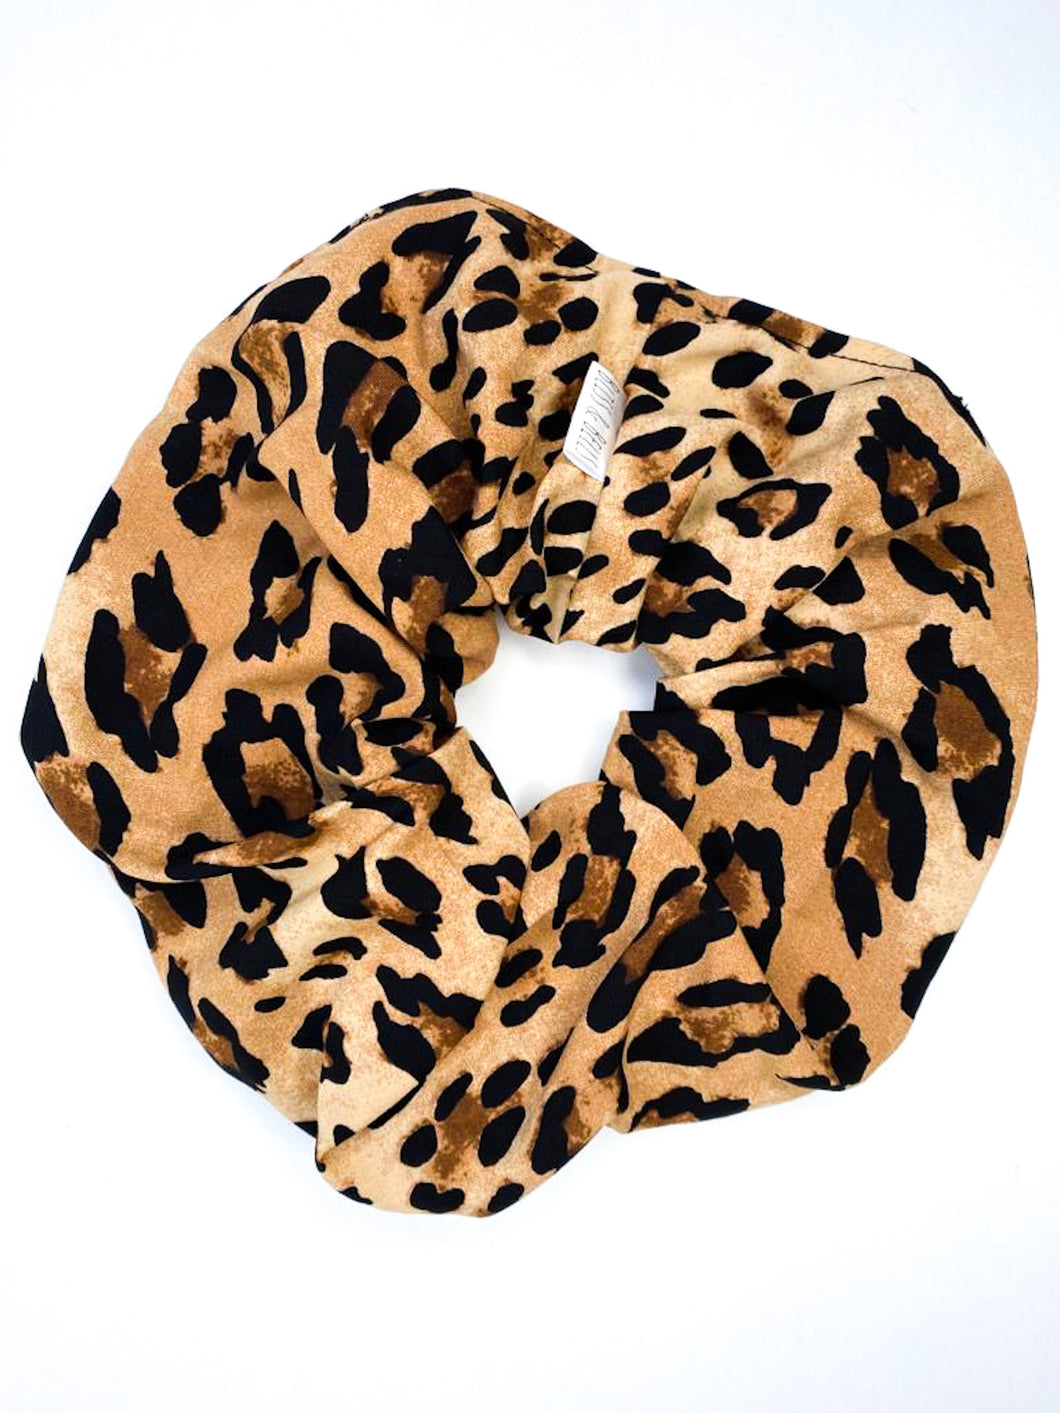 Leopard - JUMBO Scrunchie - Tan/Black - Handmade